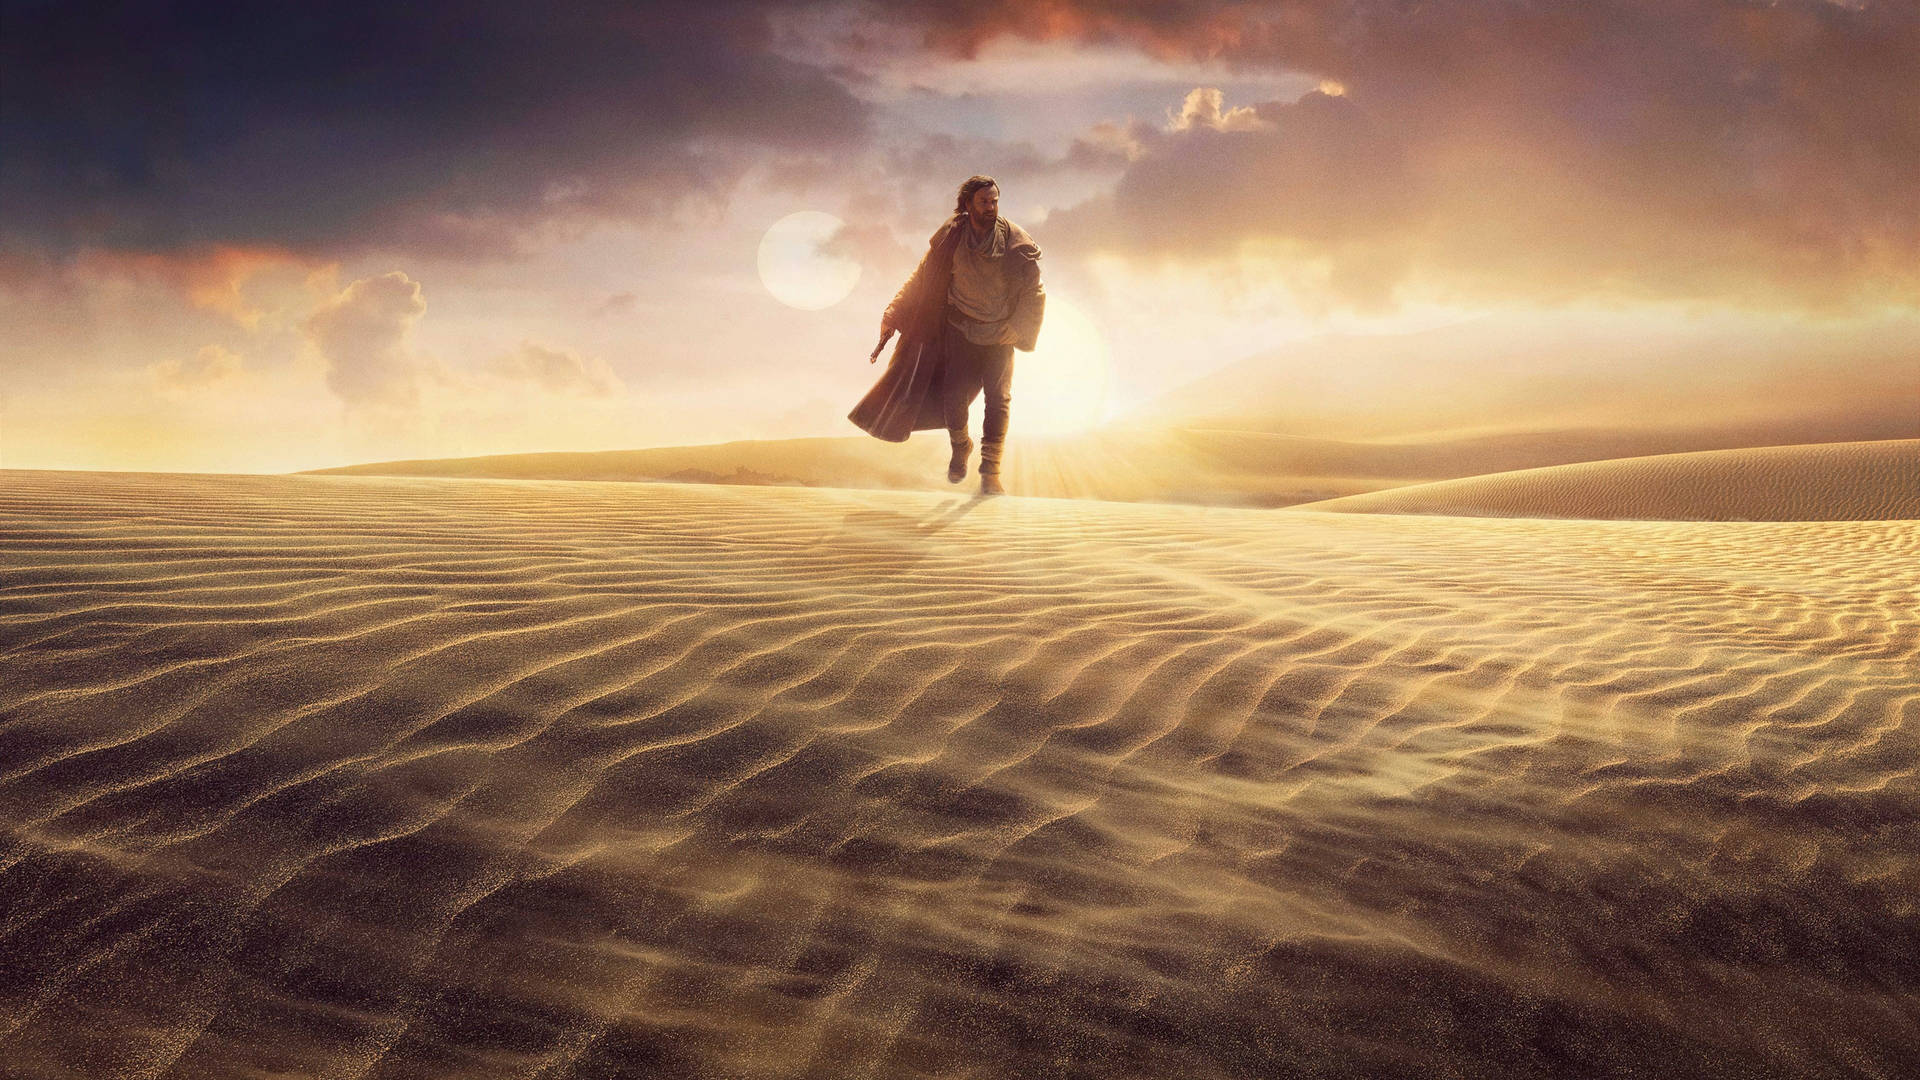 Obi Wan Kenobi Tatooine Desert Background